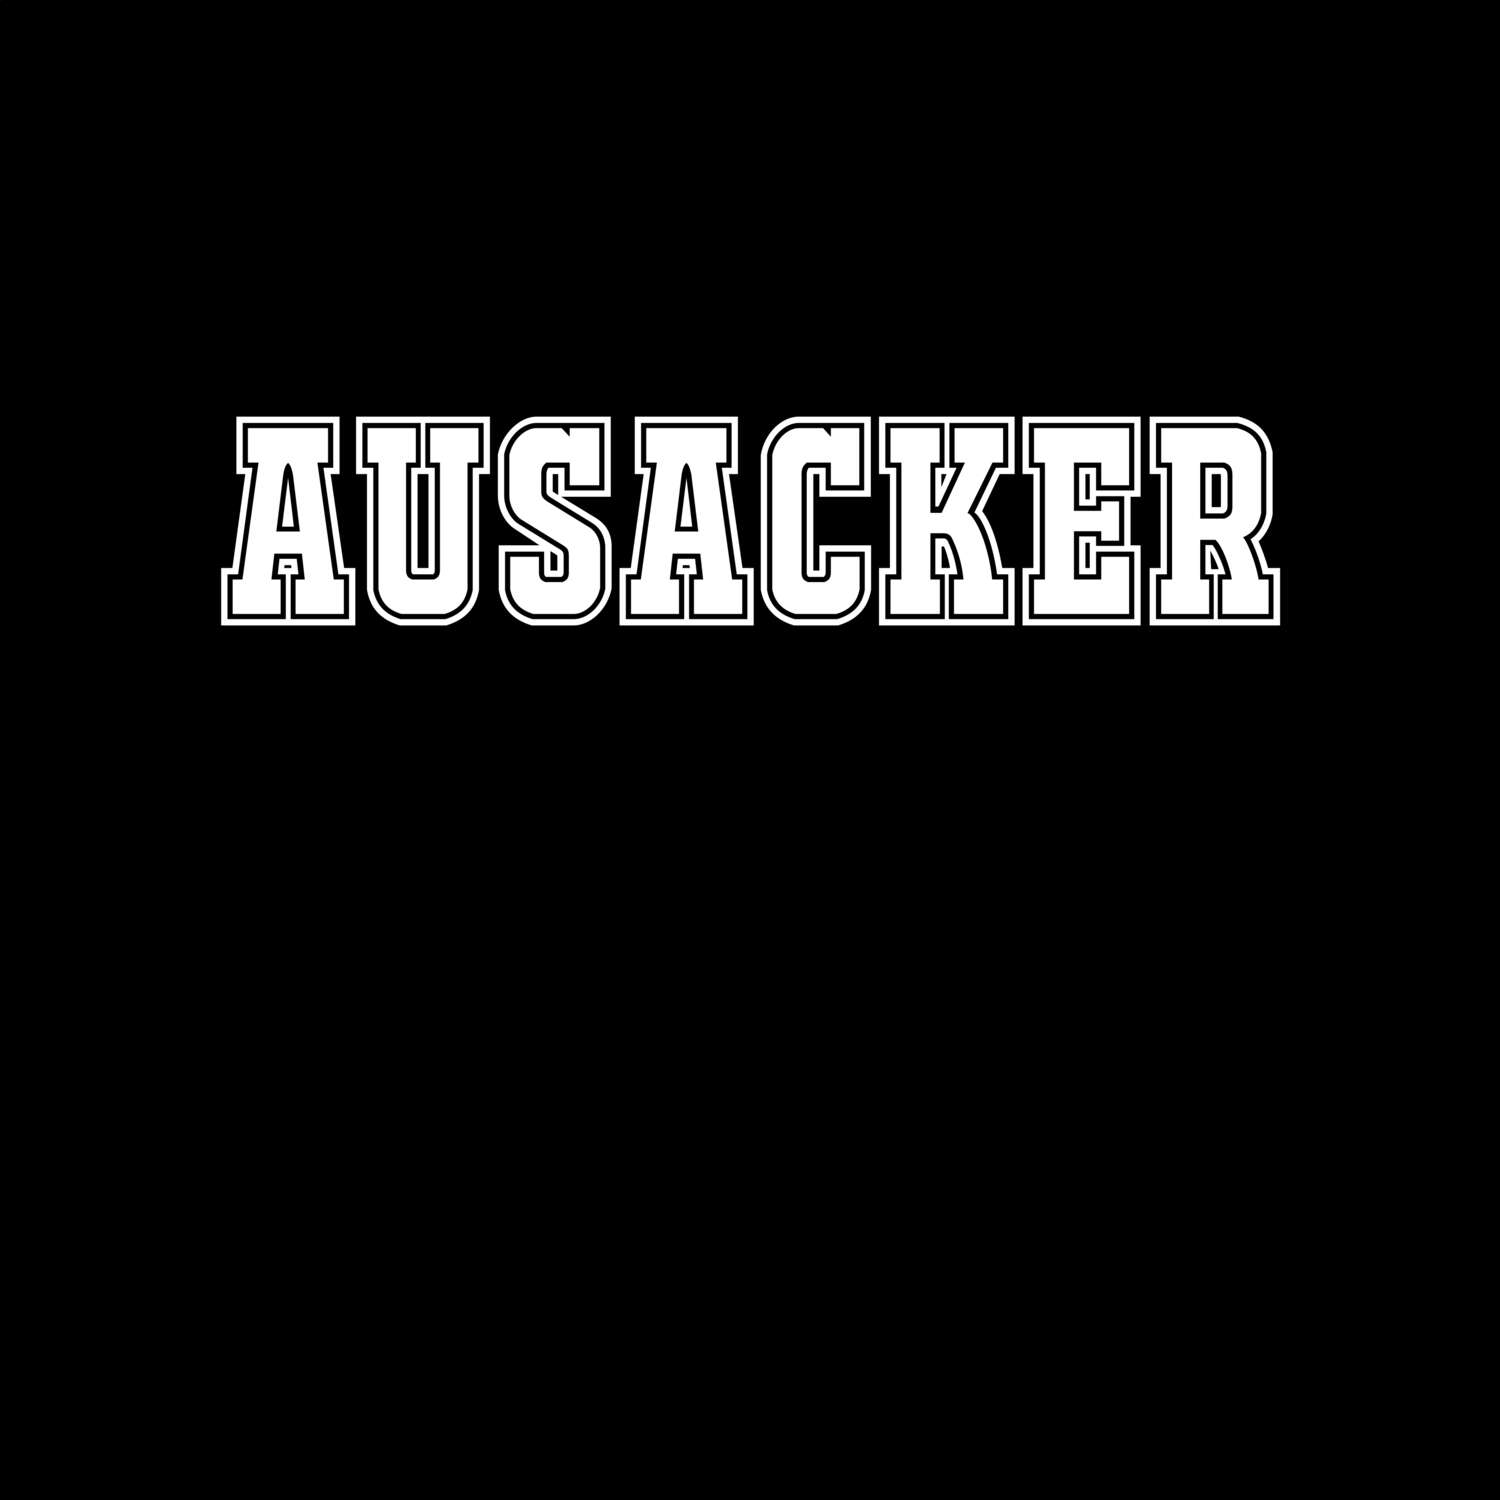 Ausacker T-Shirt »Classic«